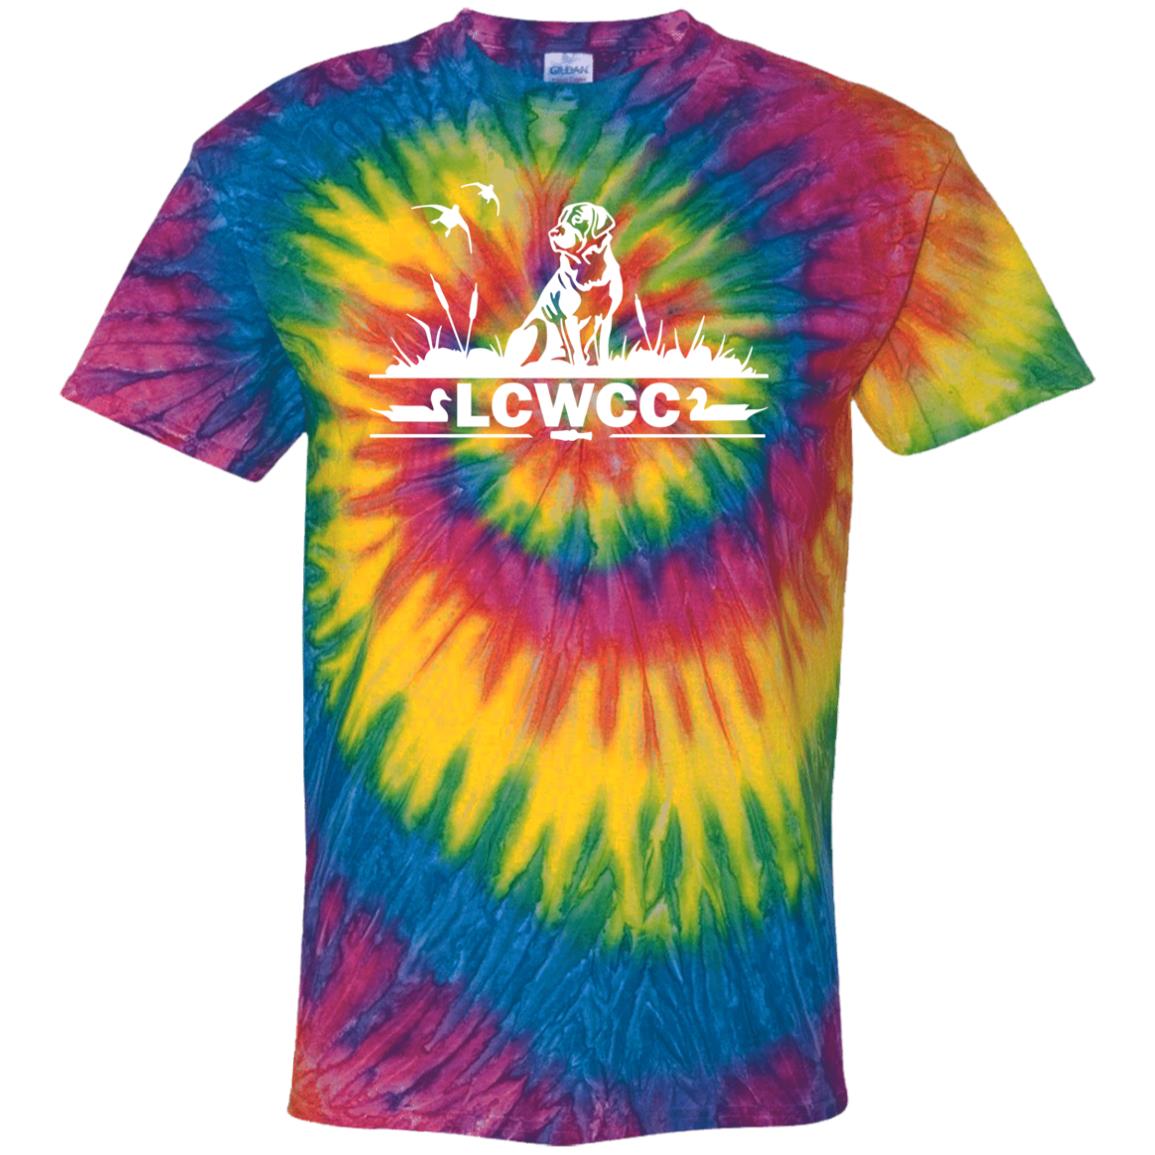 LCWCC Dog - White CD100 100% Cotton Tie Dye T-Shirt